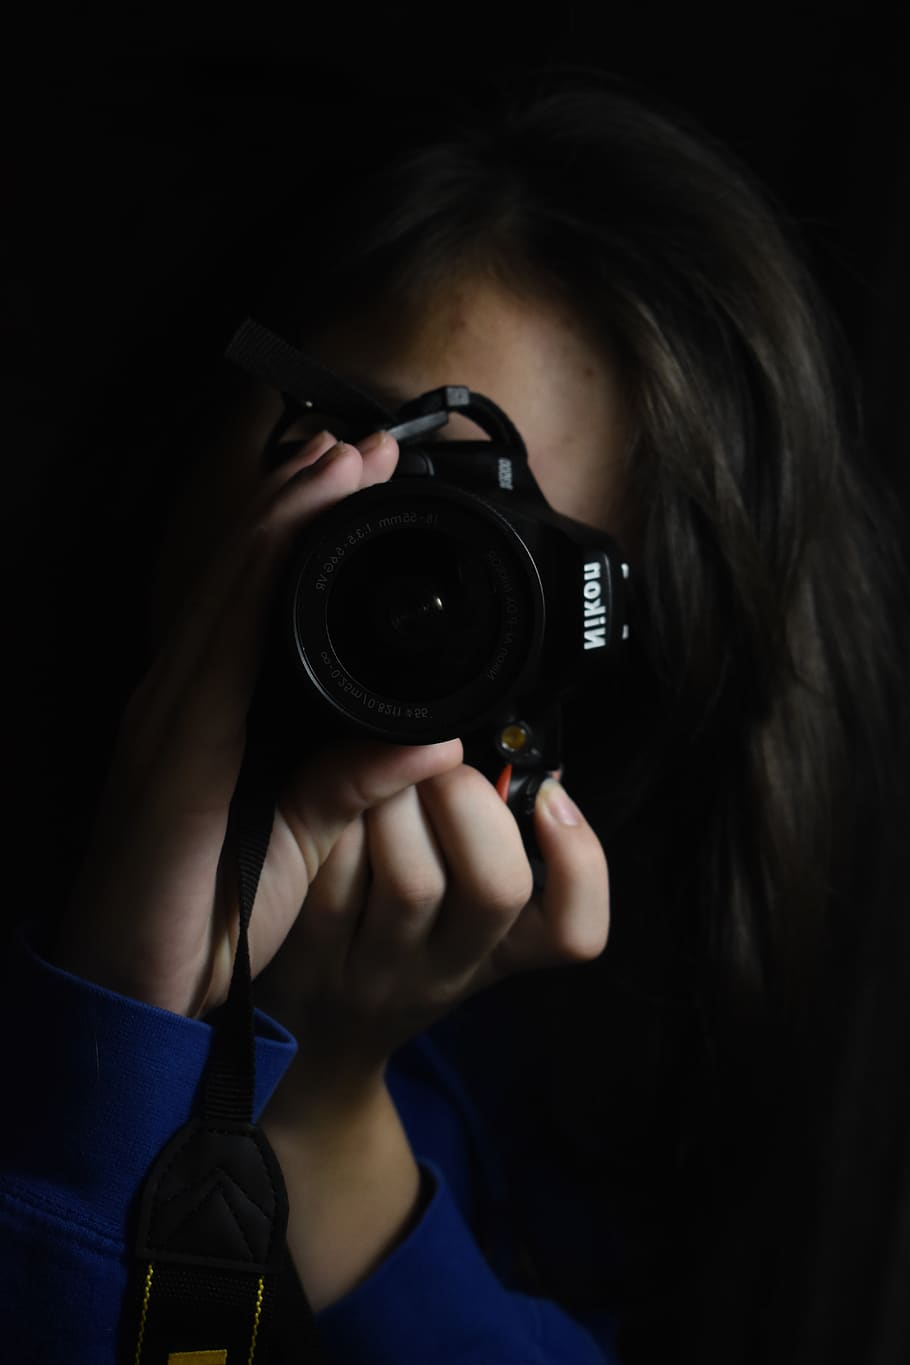 Фото девушки с фотоаппаратом без лица